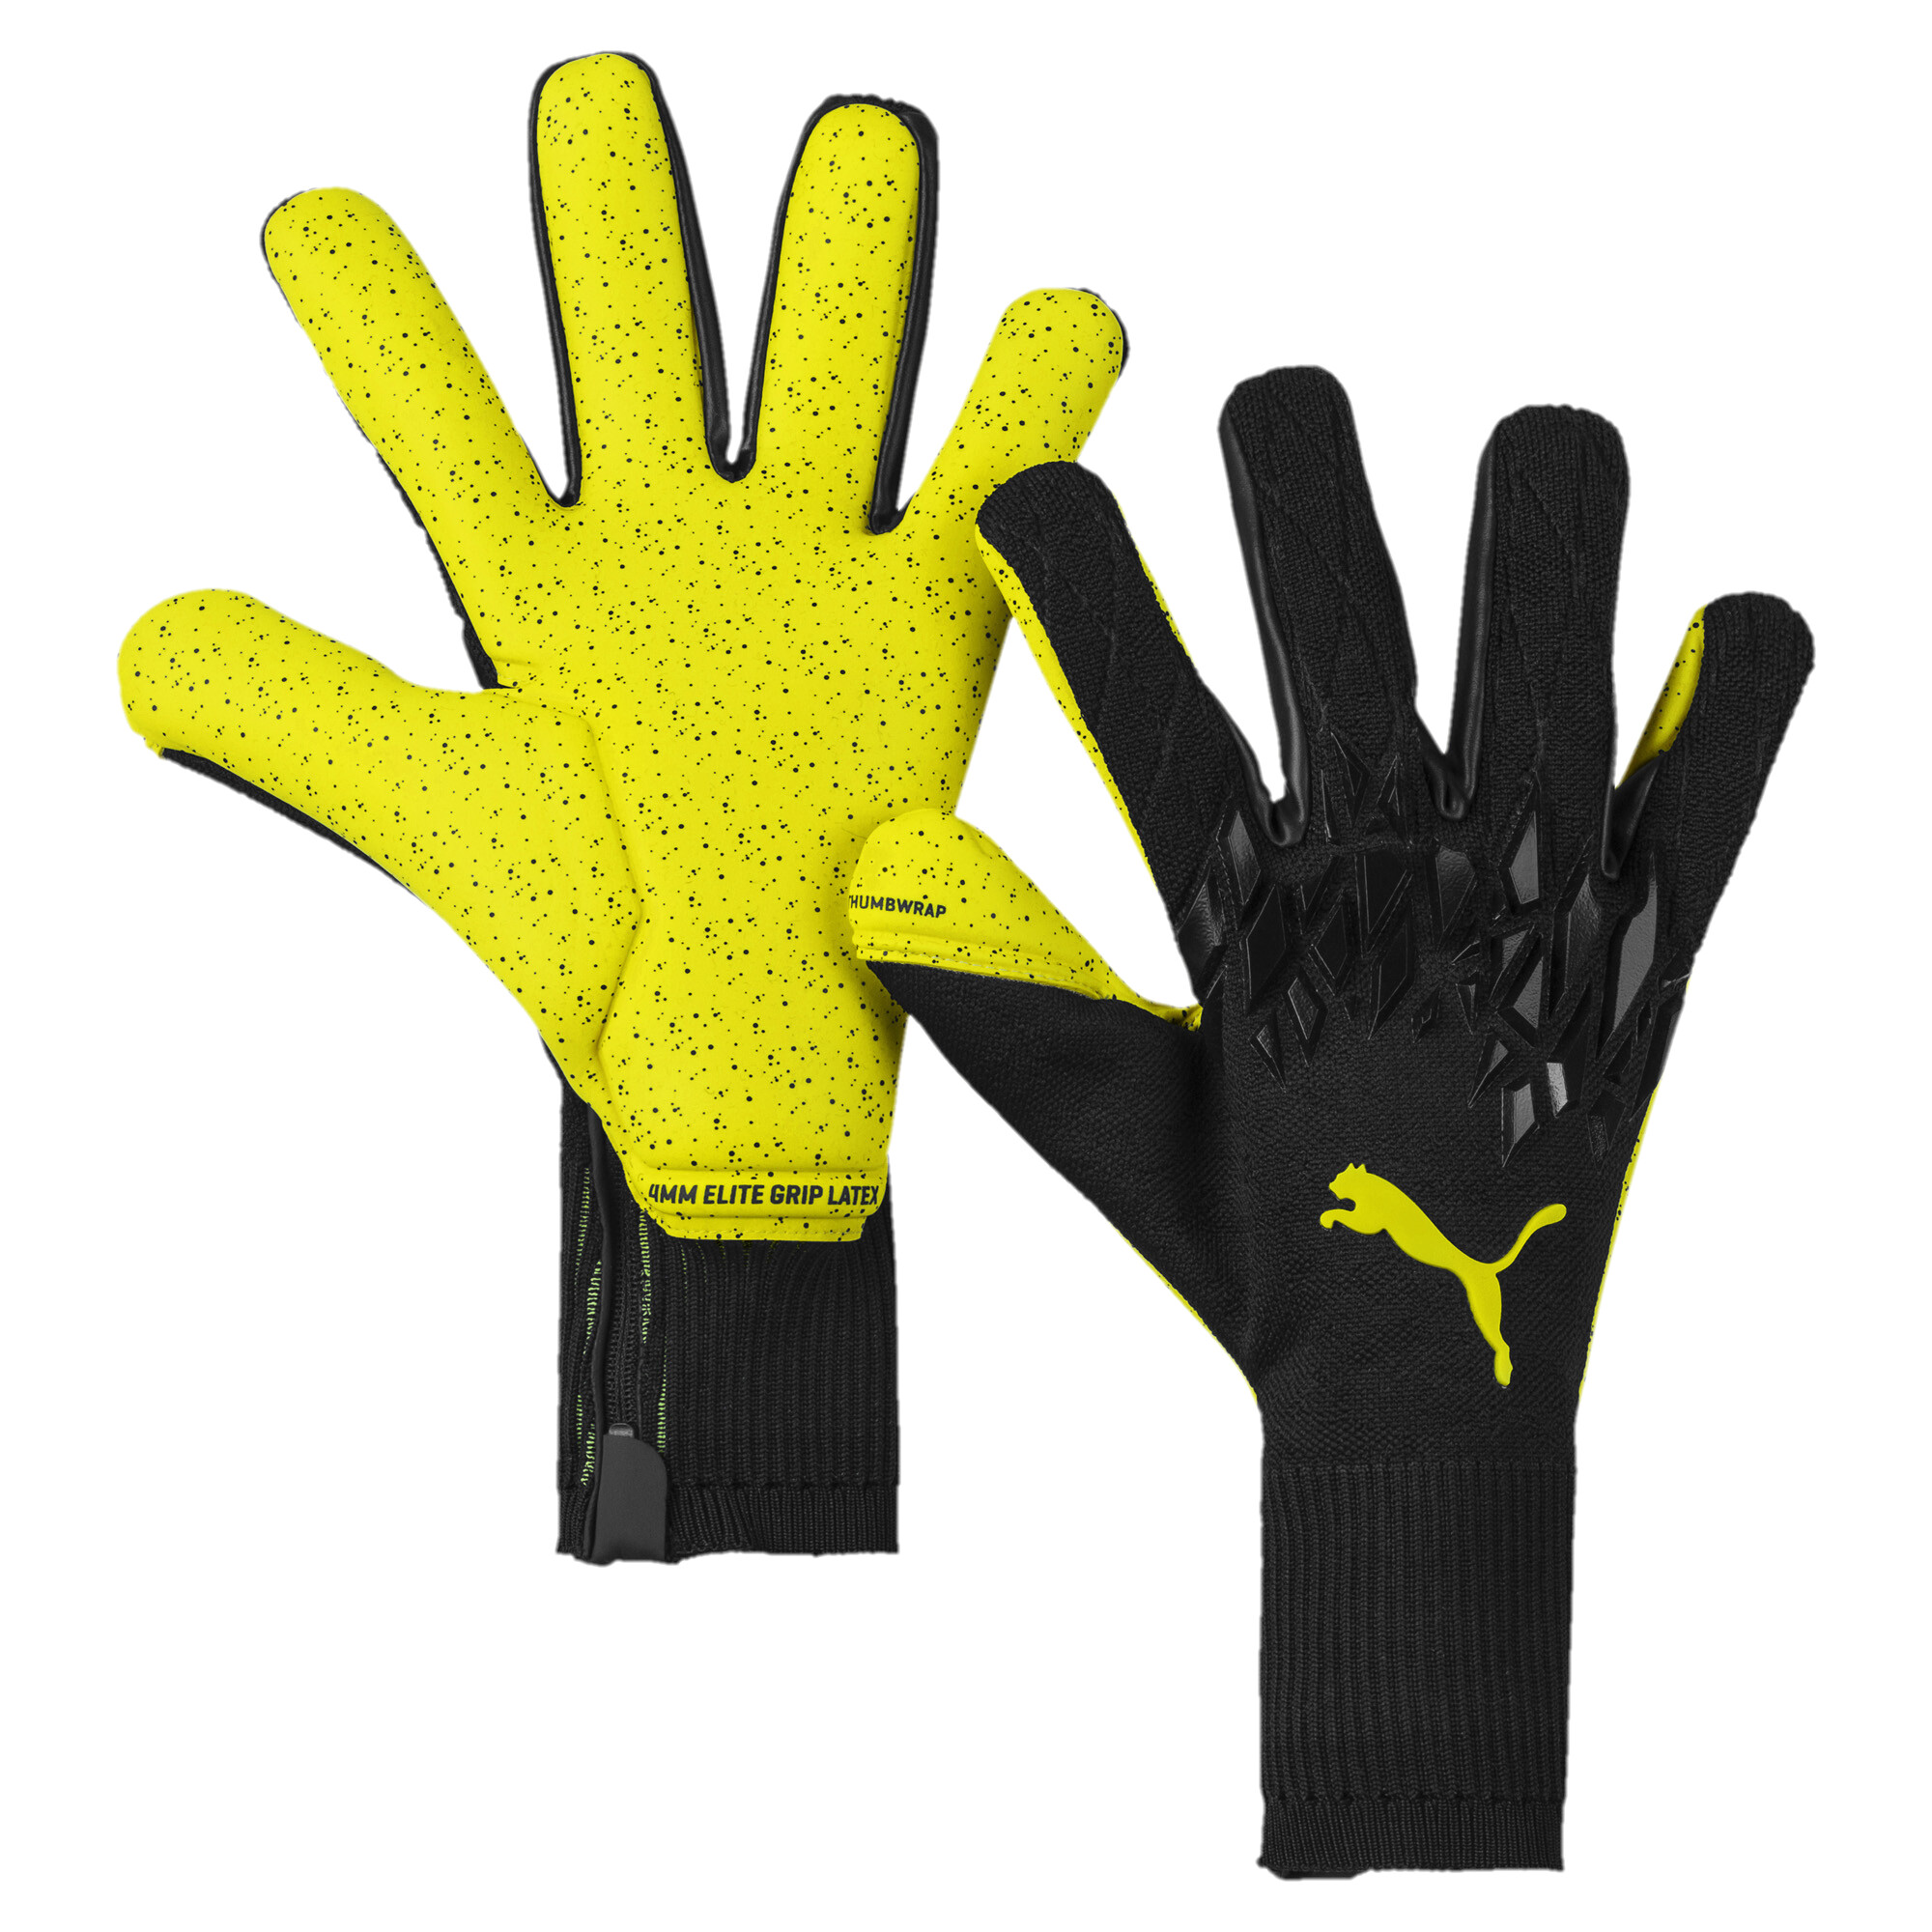 Puma FUTURE Grip 19.1 Football Goalkeeper Gloves, Black, Size 10, Accessories